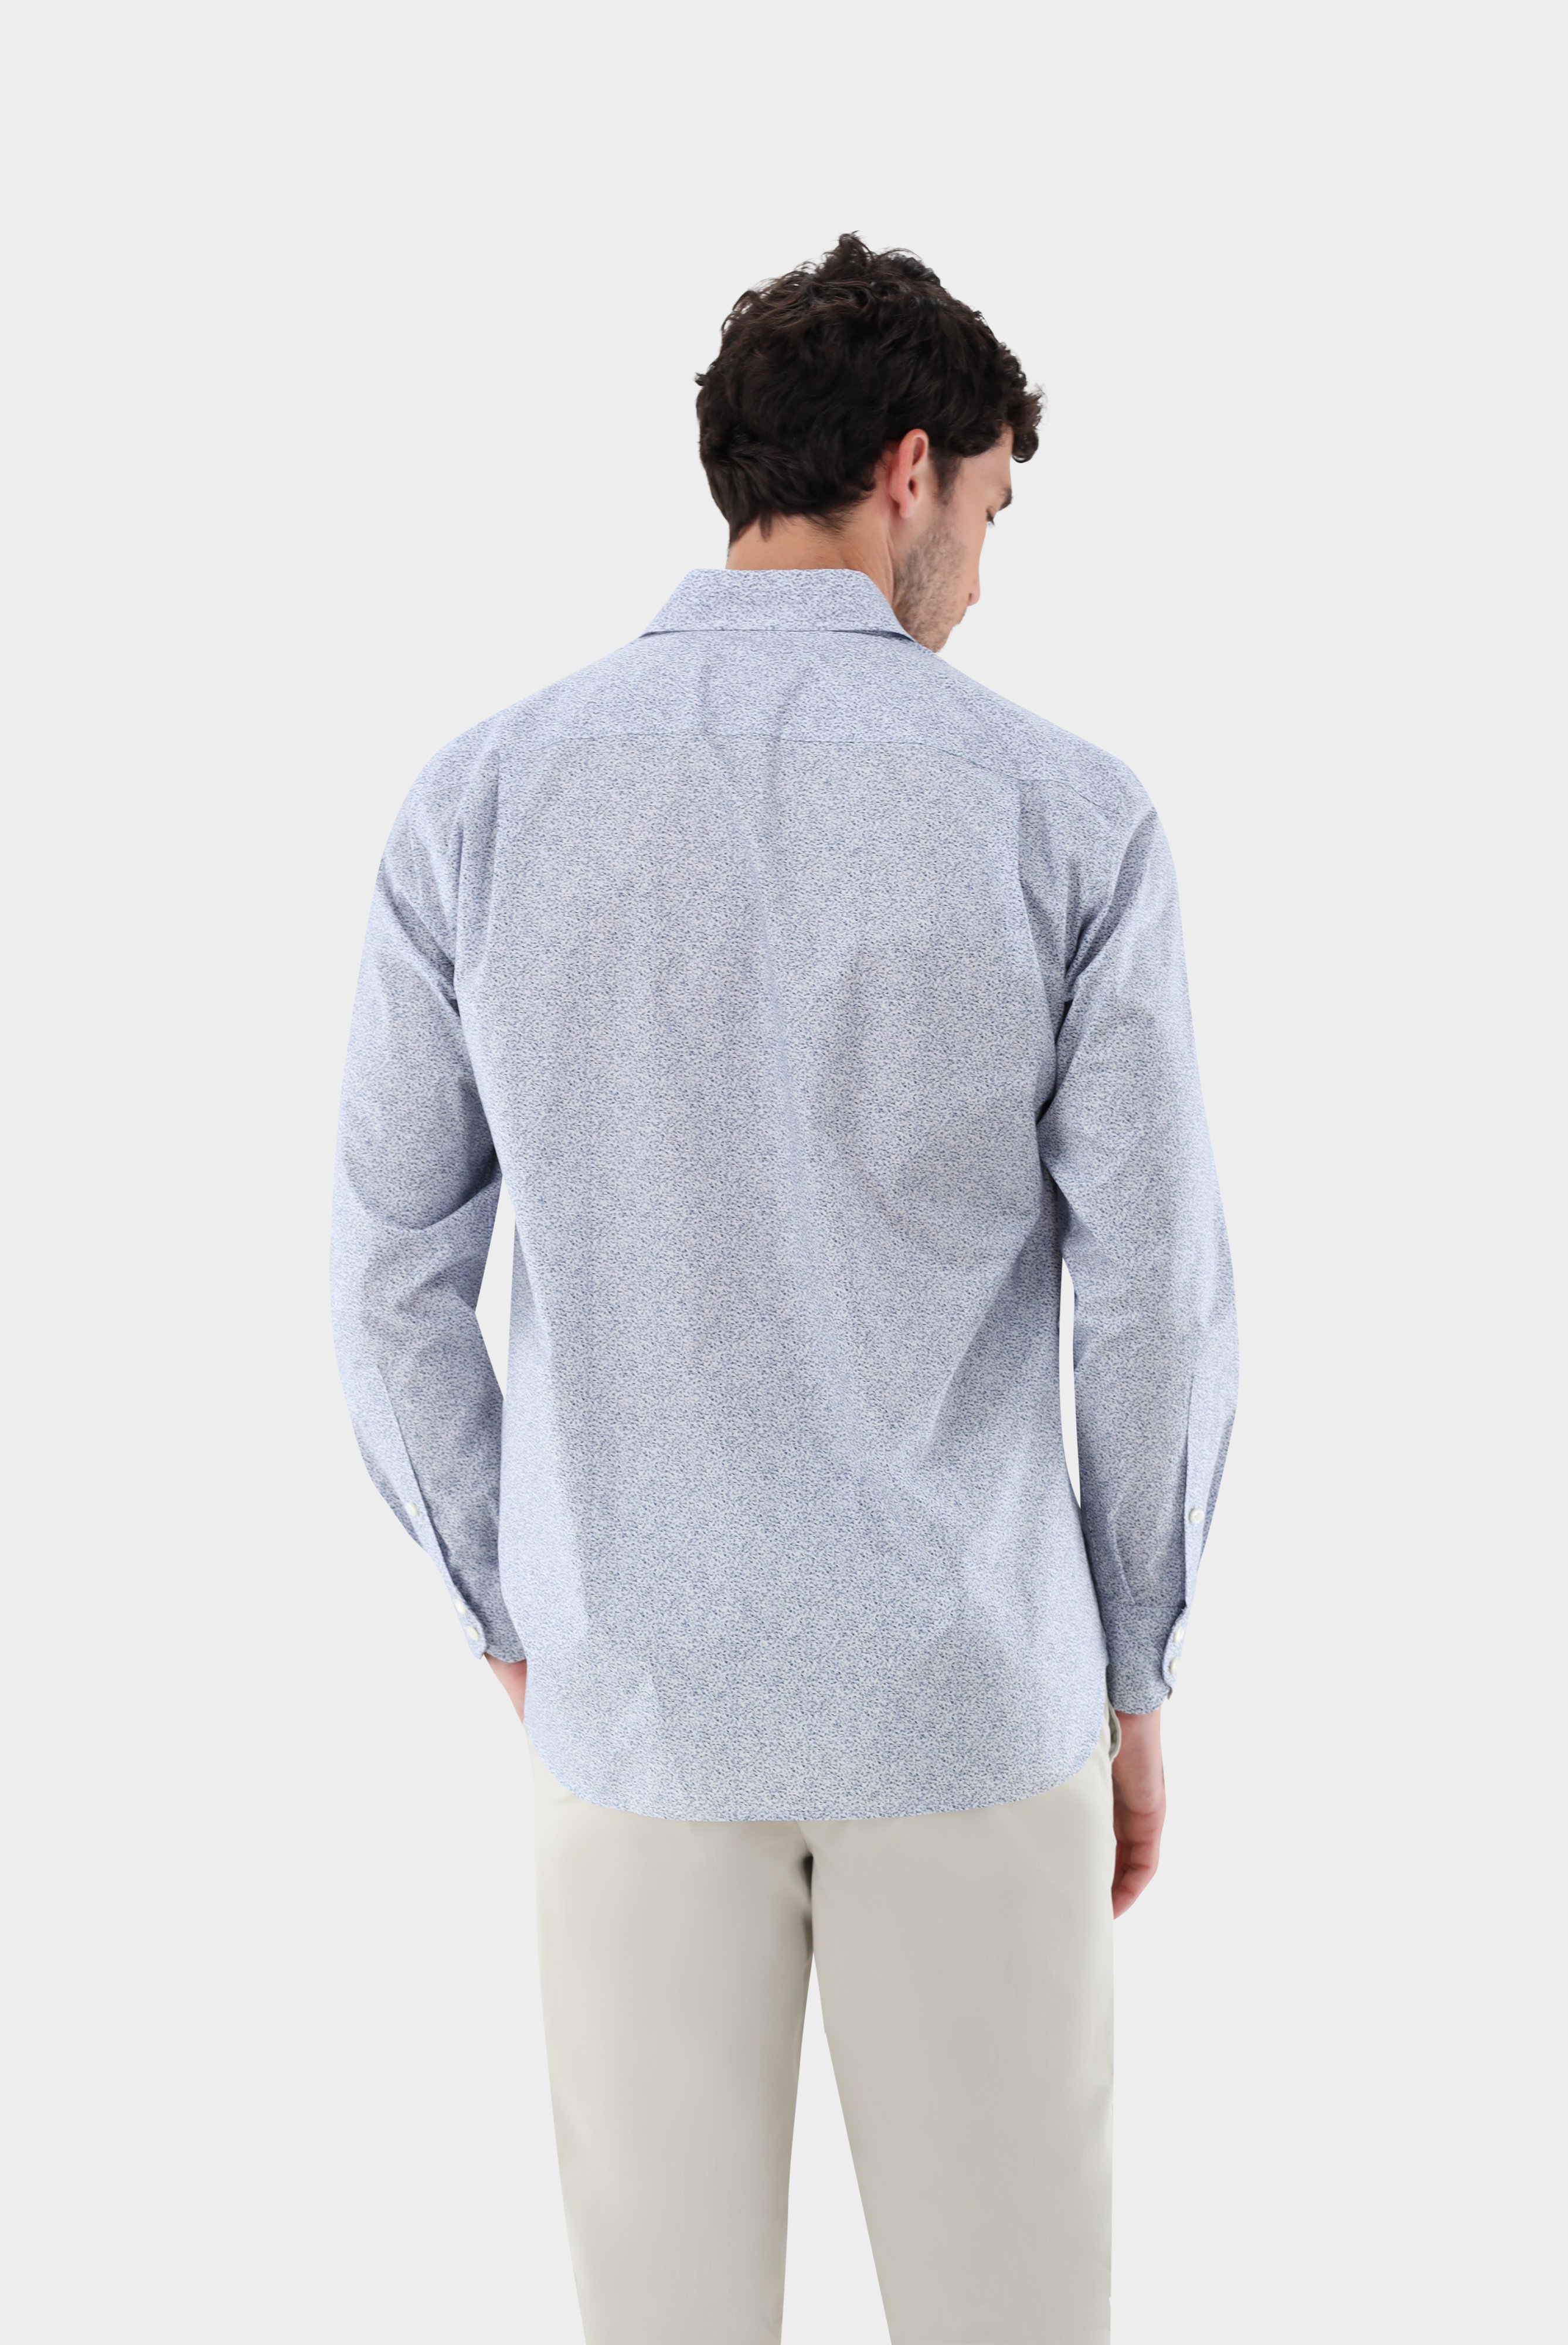 Casual Hemden+Hemd mit Mikro Druck Comfort Fit+20.2021.AV.170363.007.40